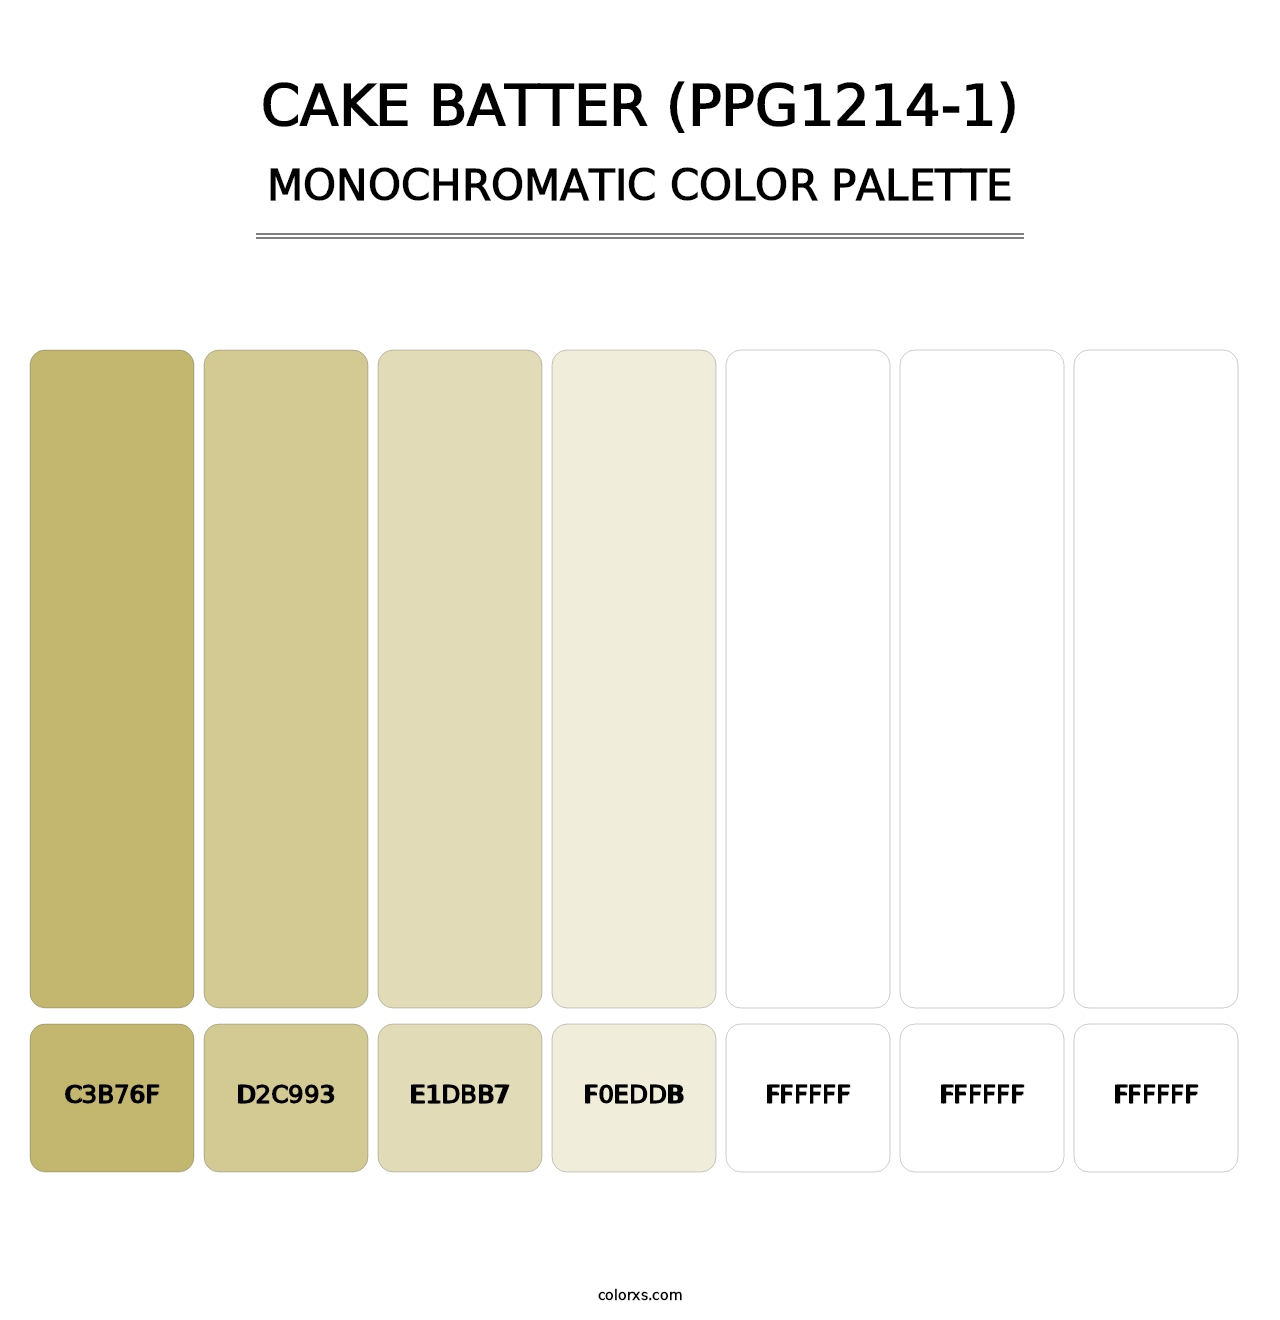 Cake Batter (PPG1214-1) - Monochromatic Color Palette